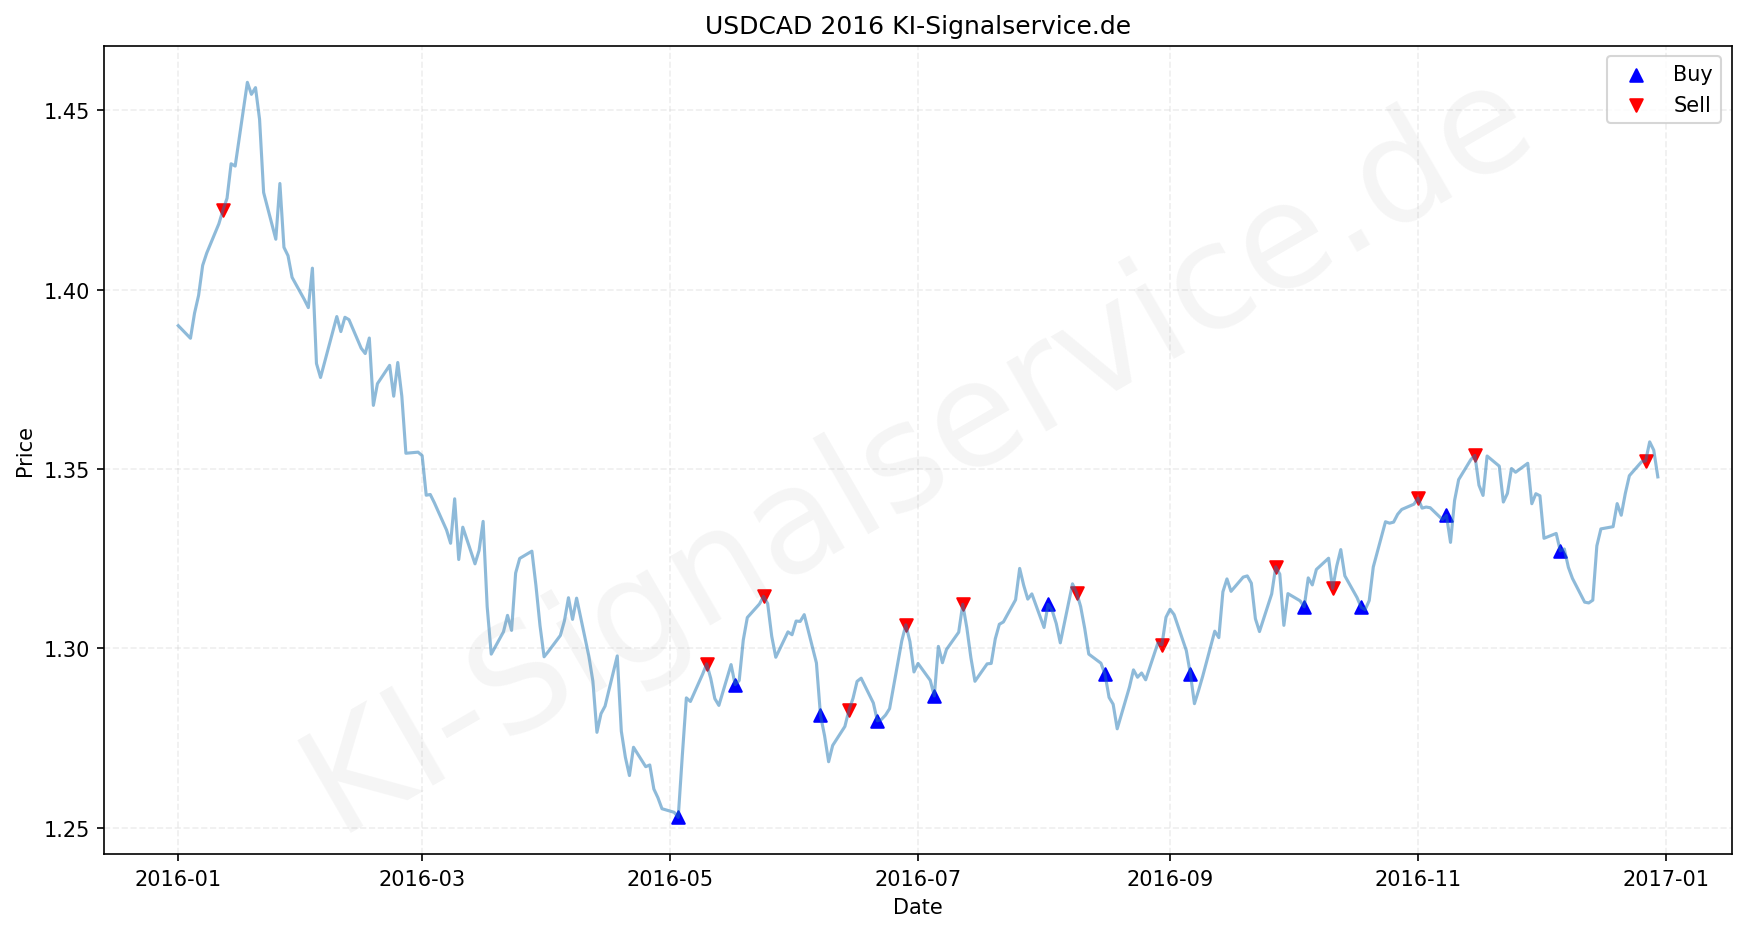 USDCAD Chart - KI Tradingsignale 2016